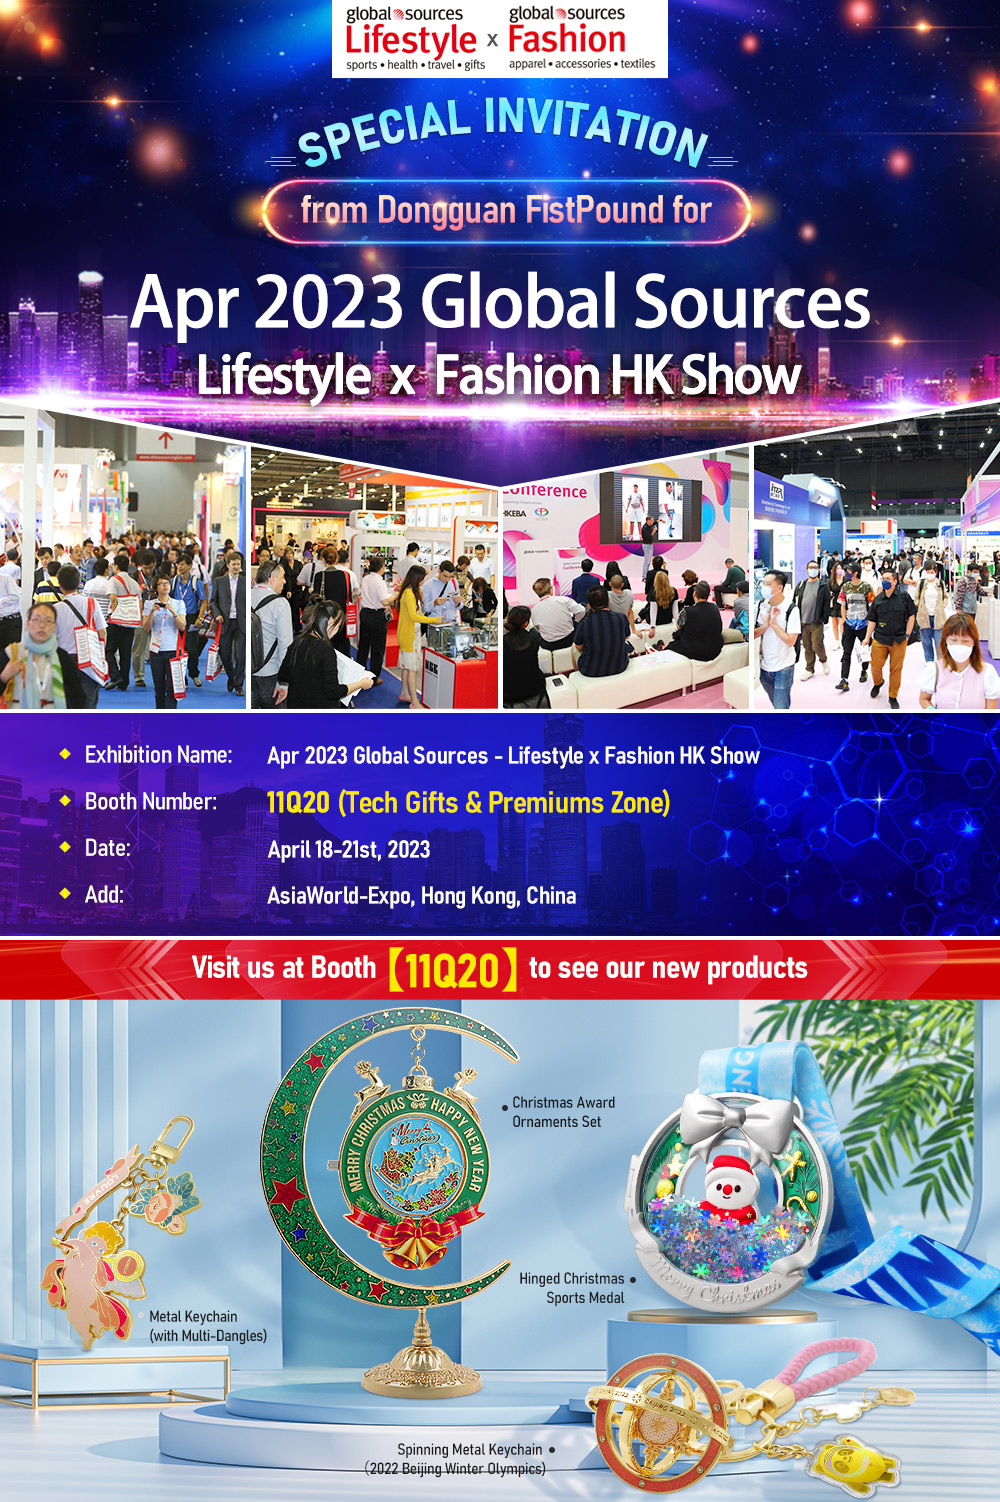 Apr 2023 Global Sources - Lifestyle x Fashion HK Show